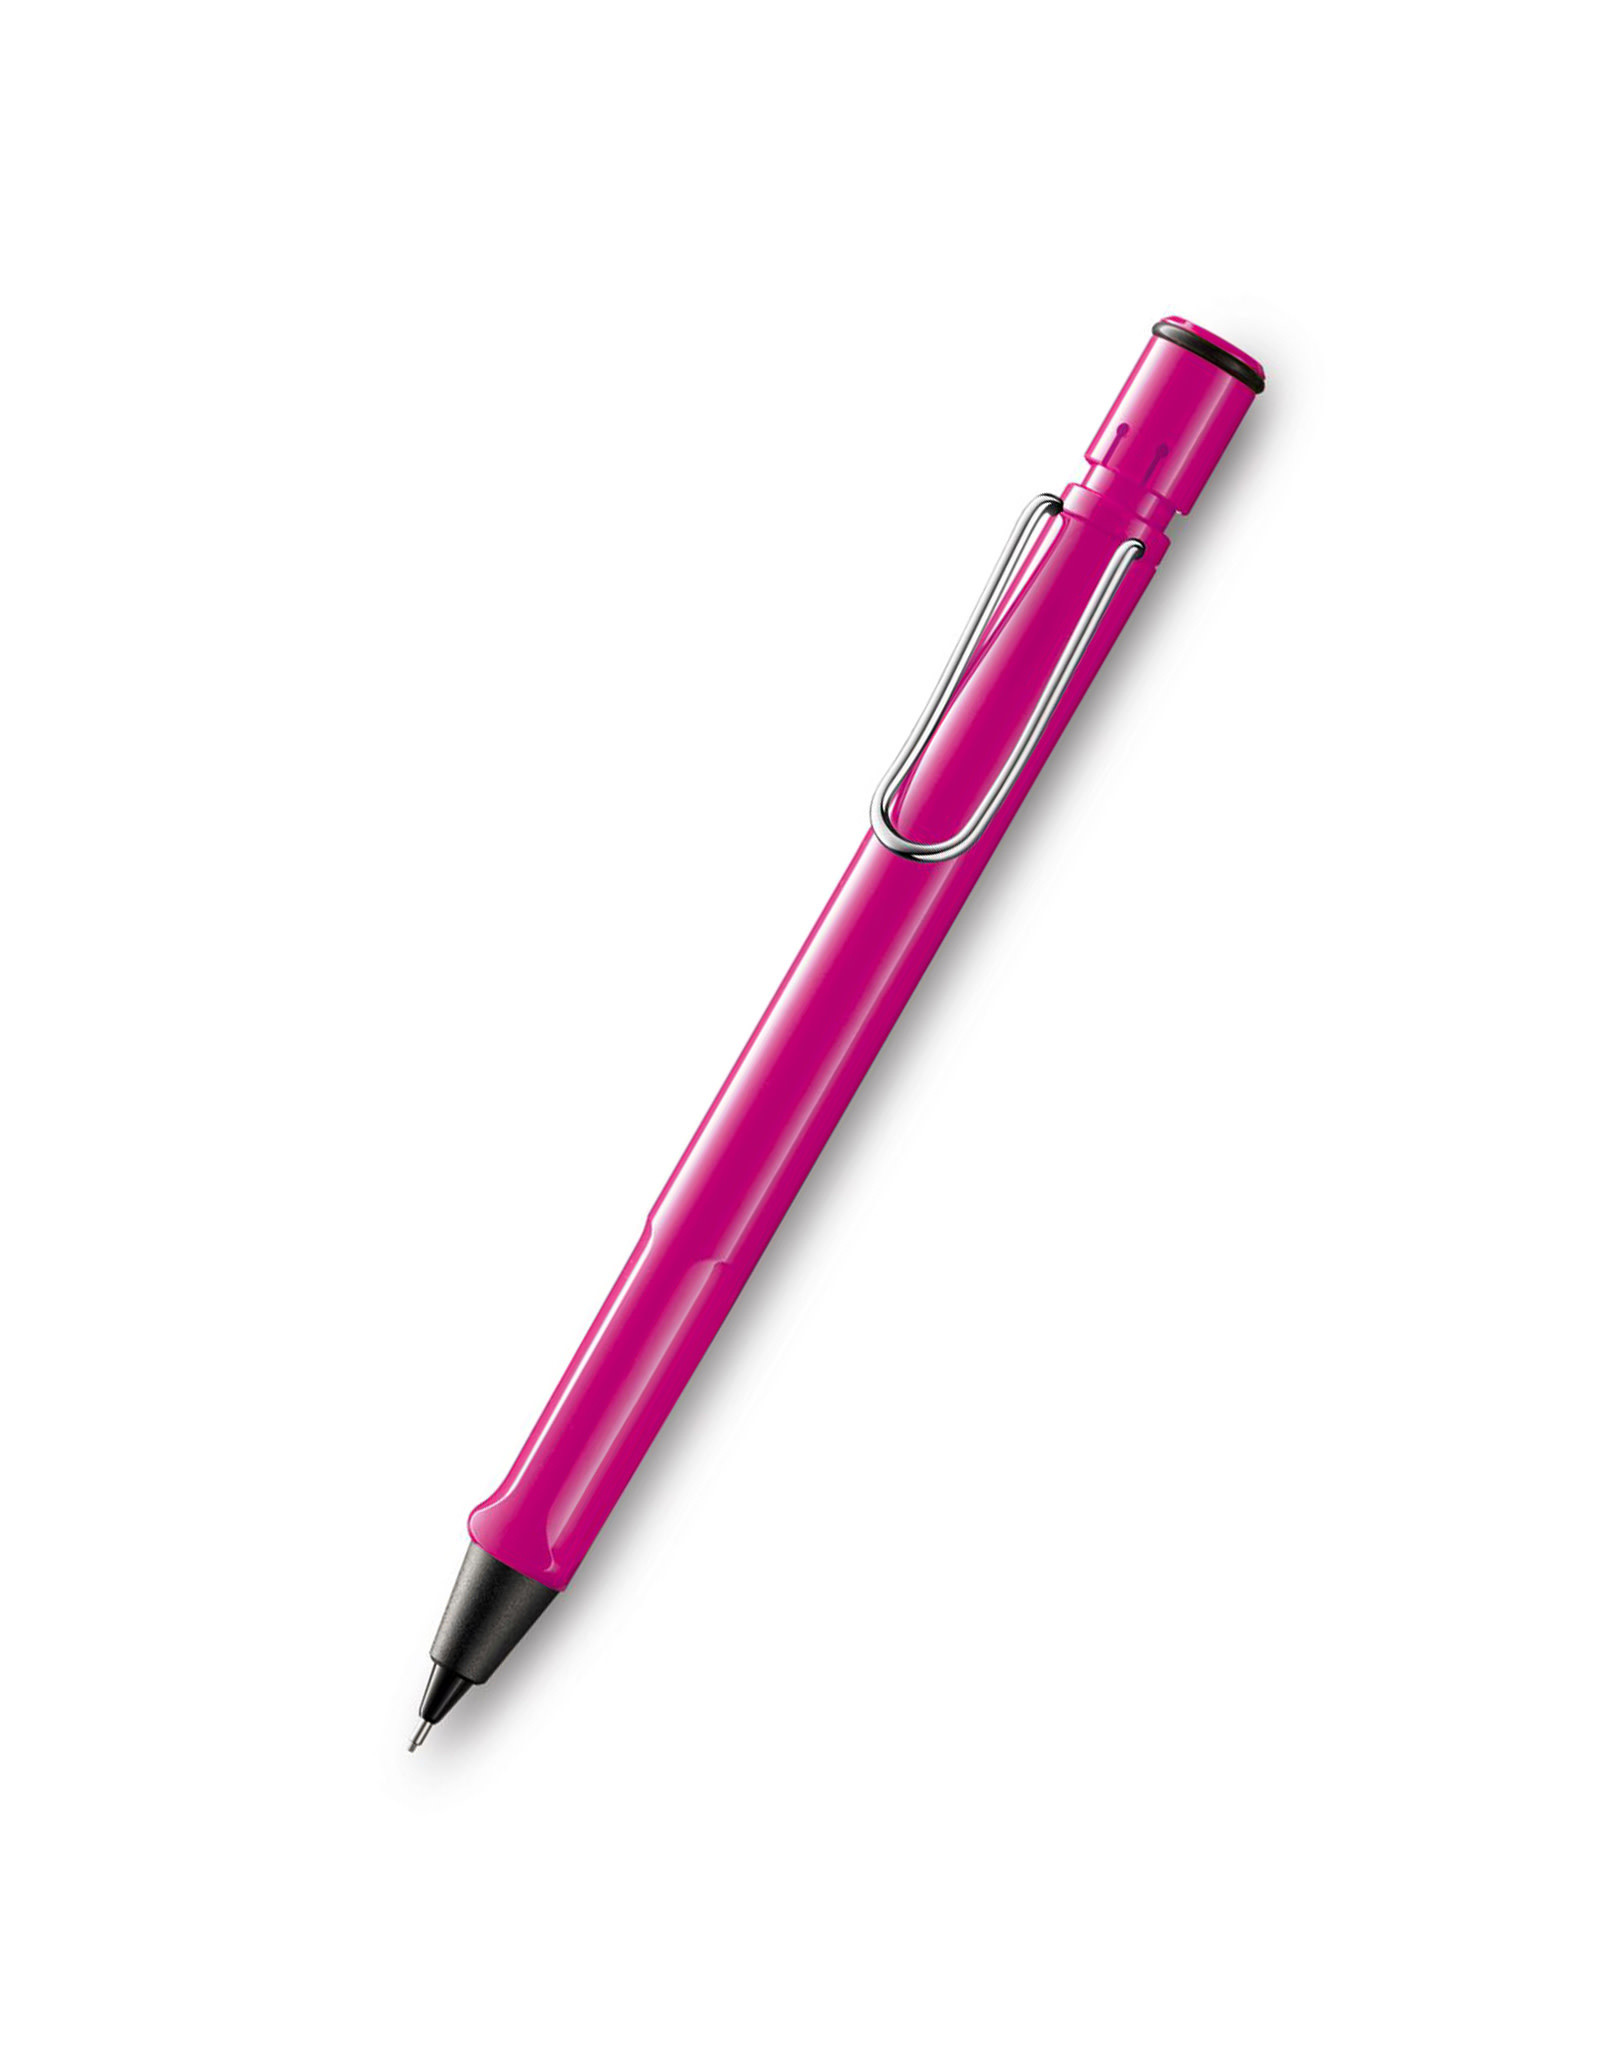 LAMY LAMY Safari Mechanical Pencil, Pink